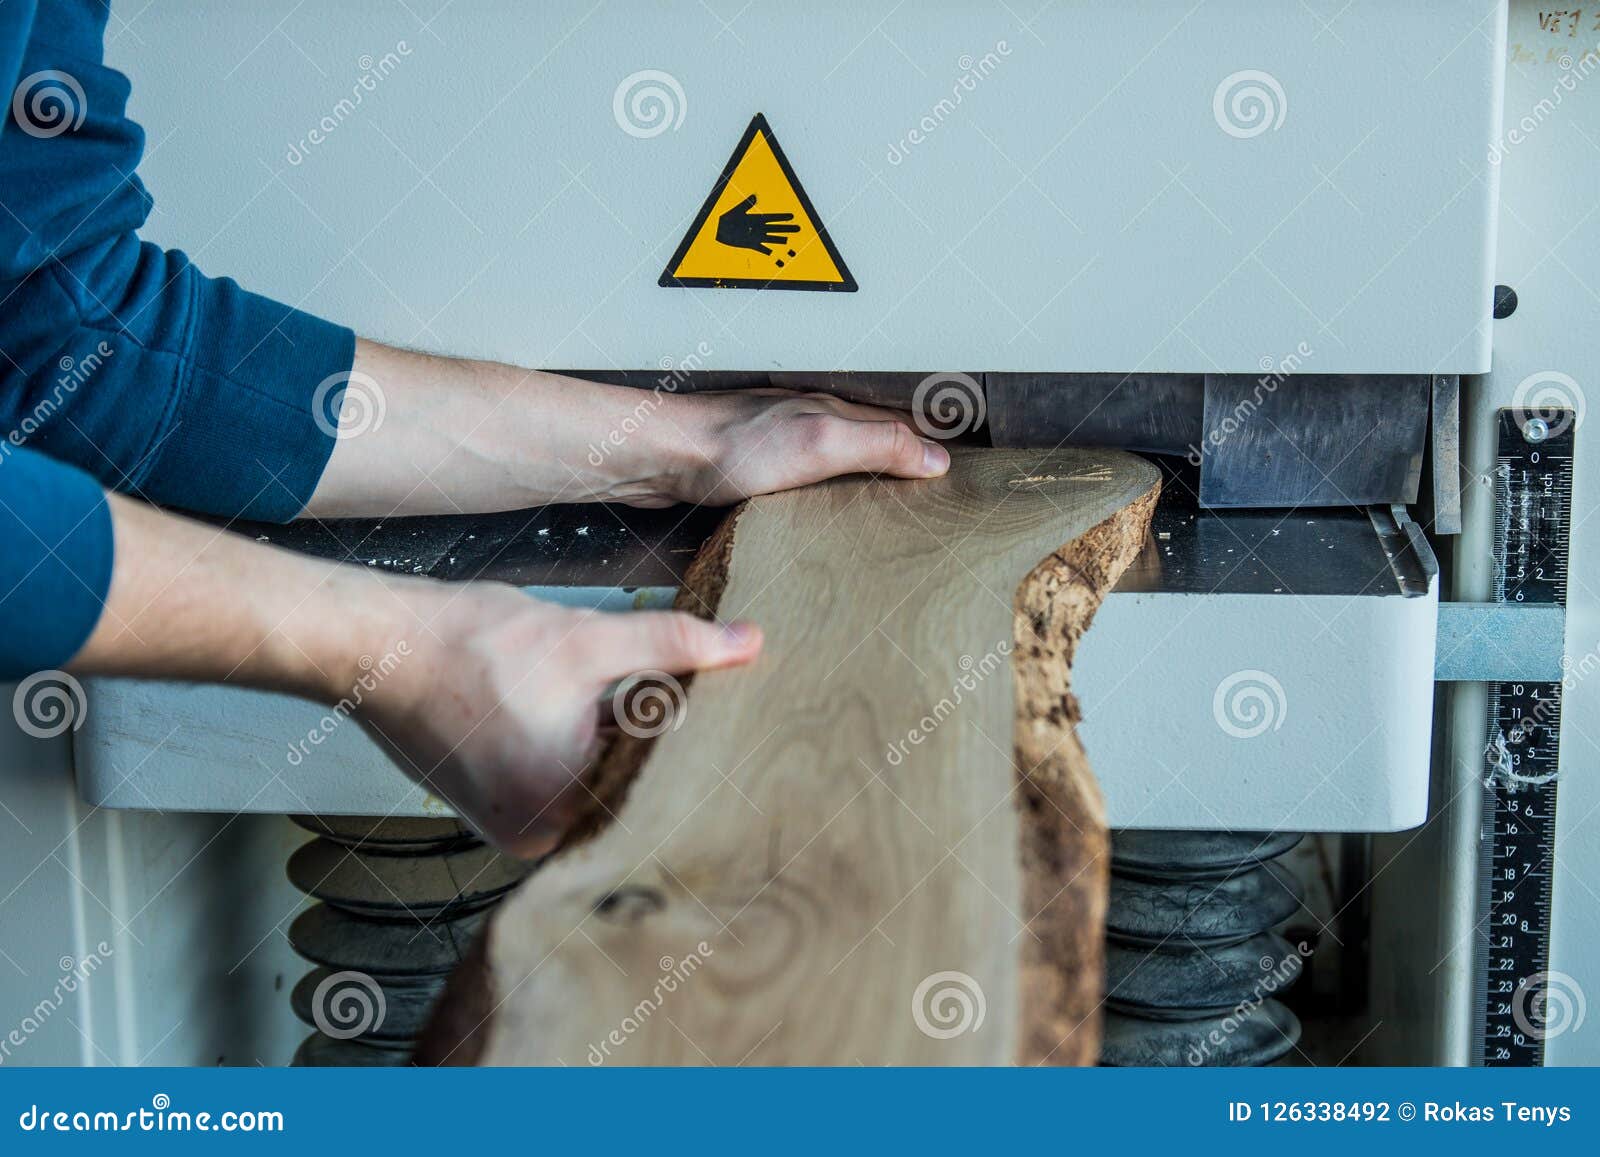 unsafe working with wood machine